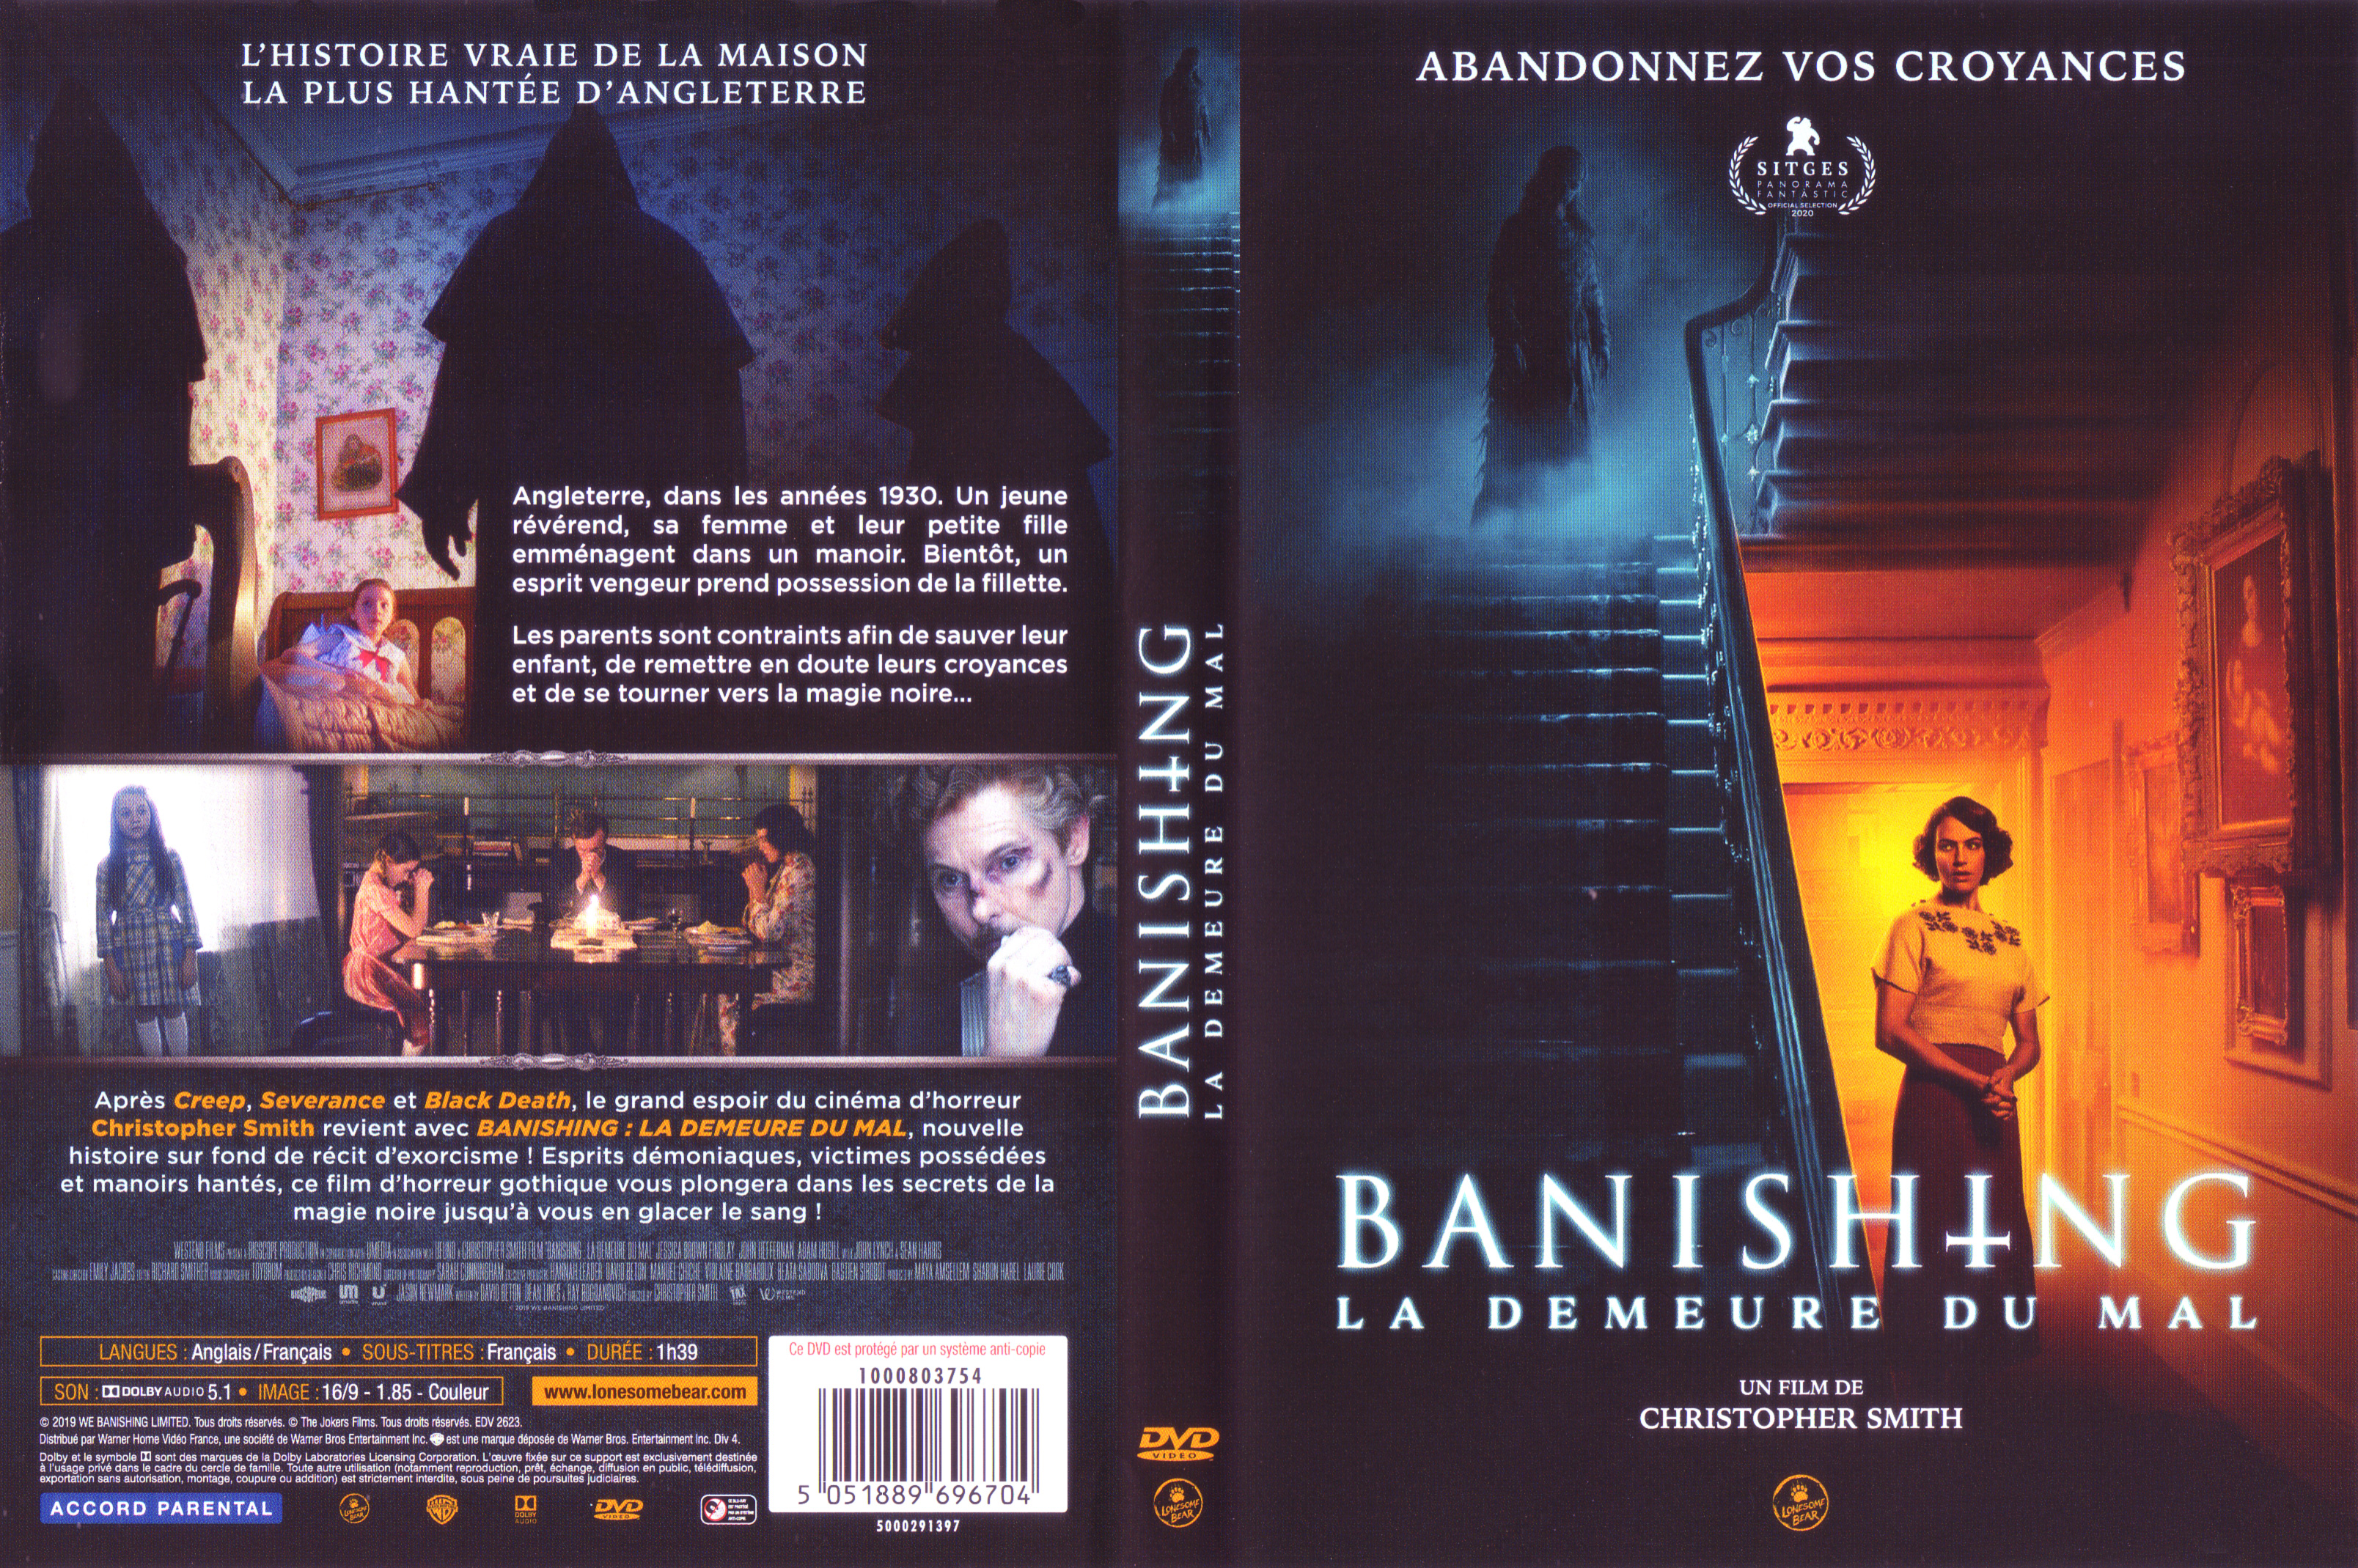 Jaquette DVD Banishing La demeure du mal